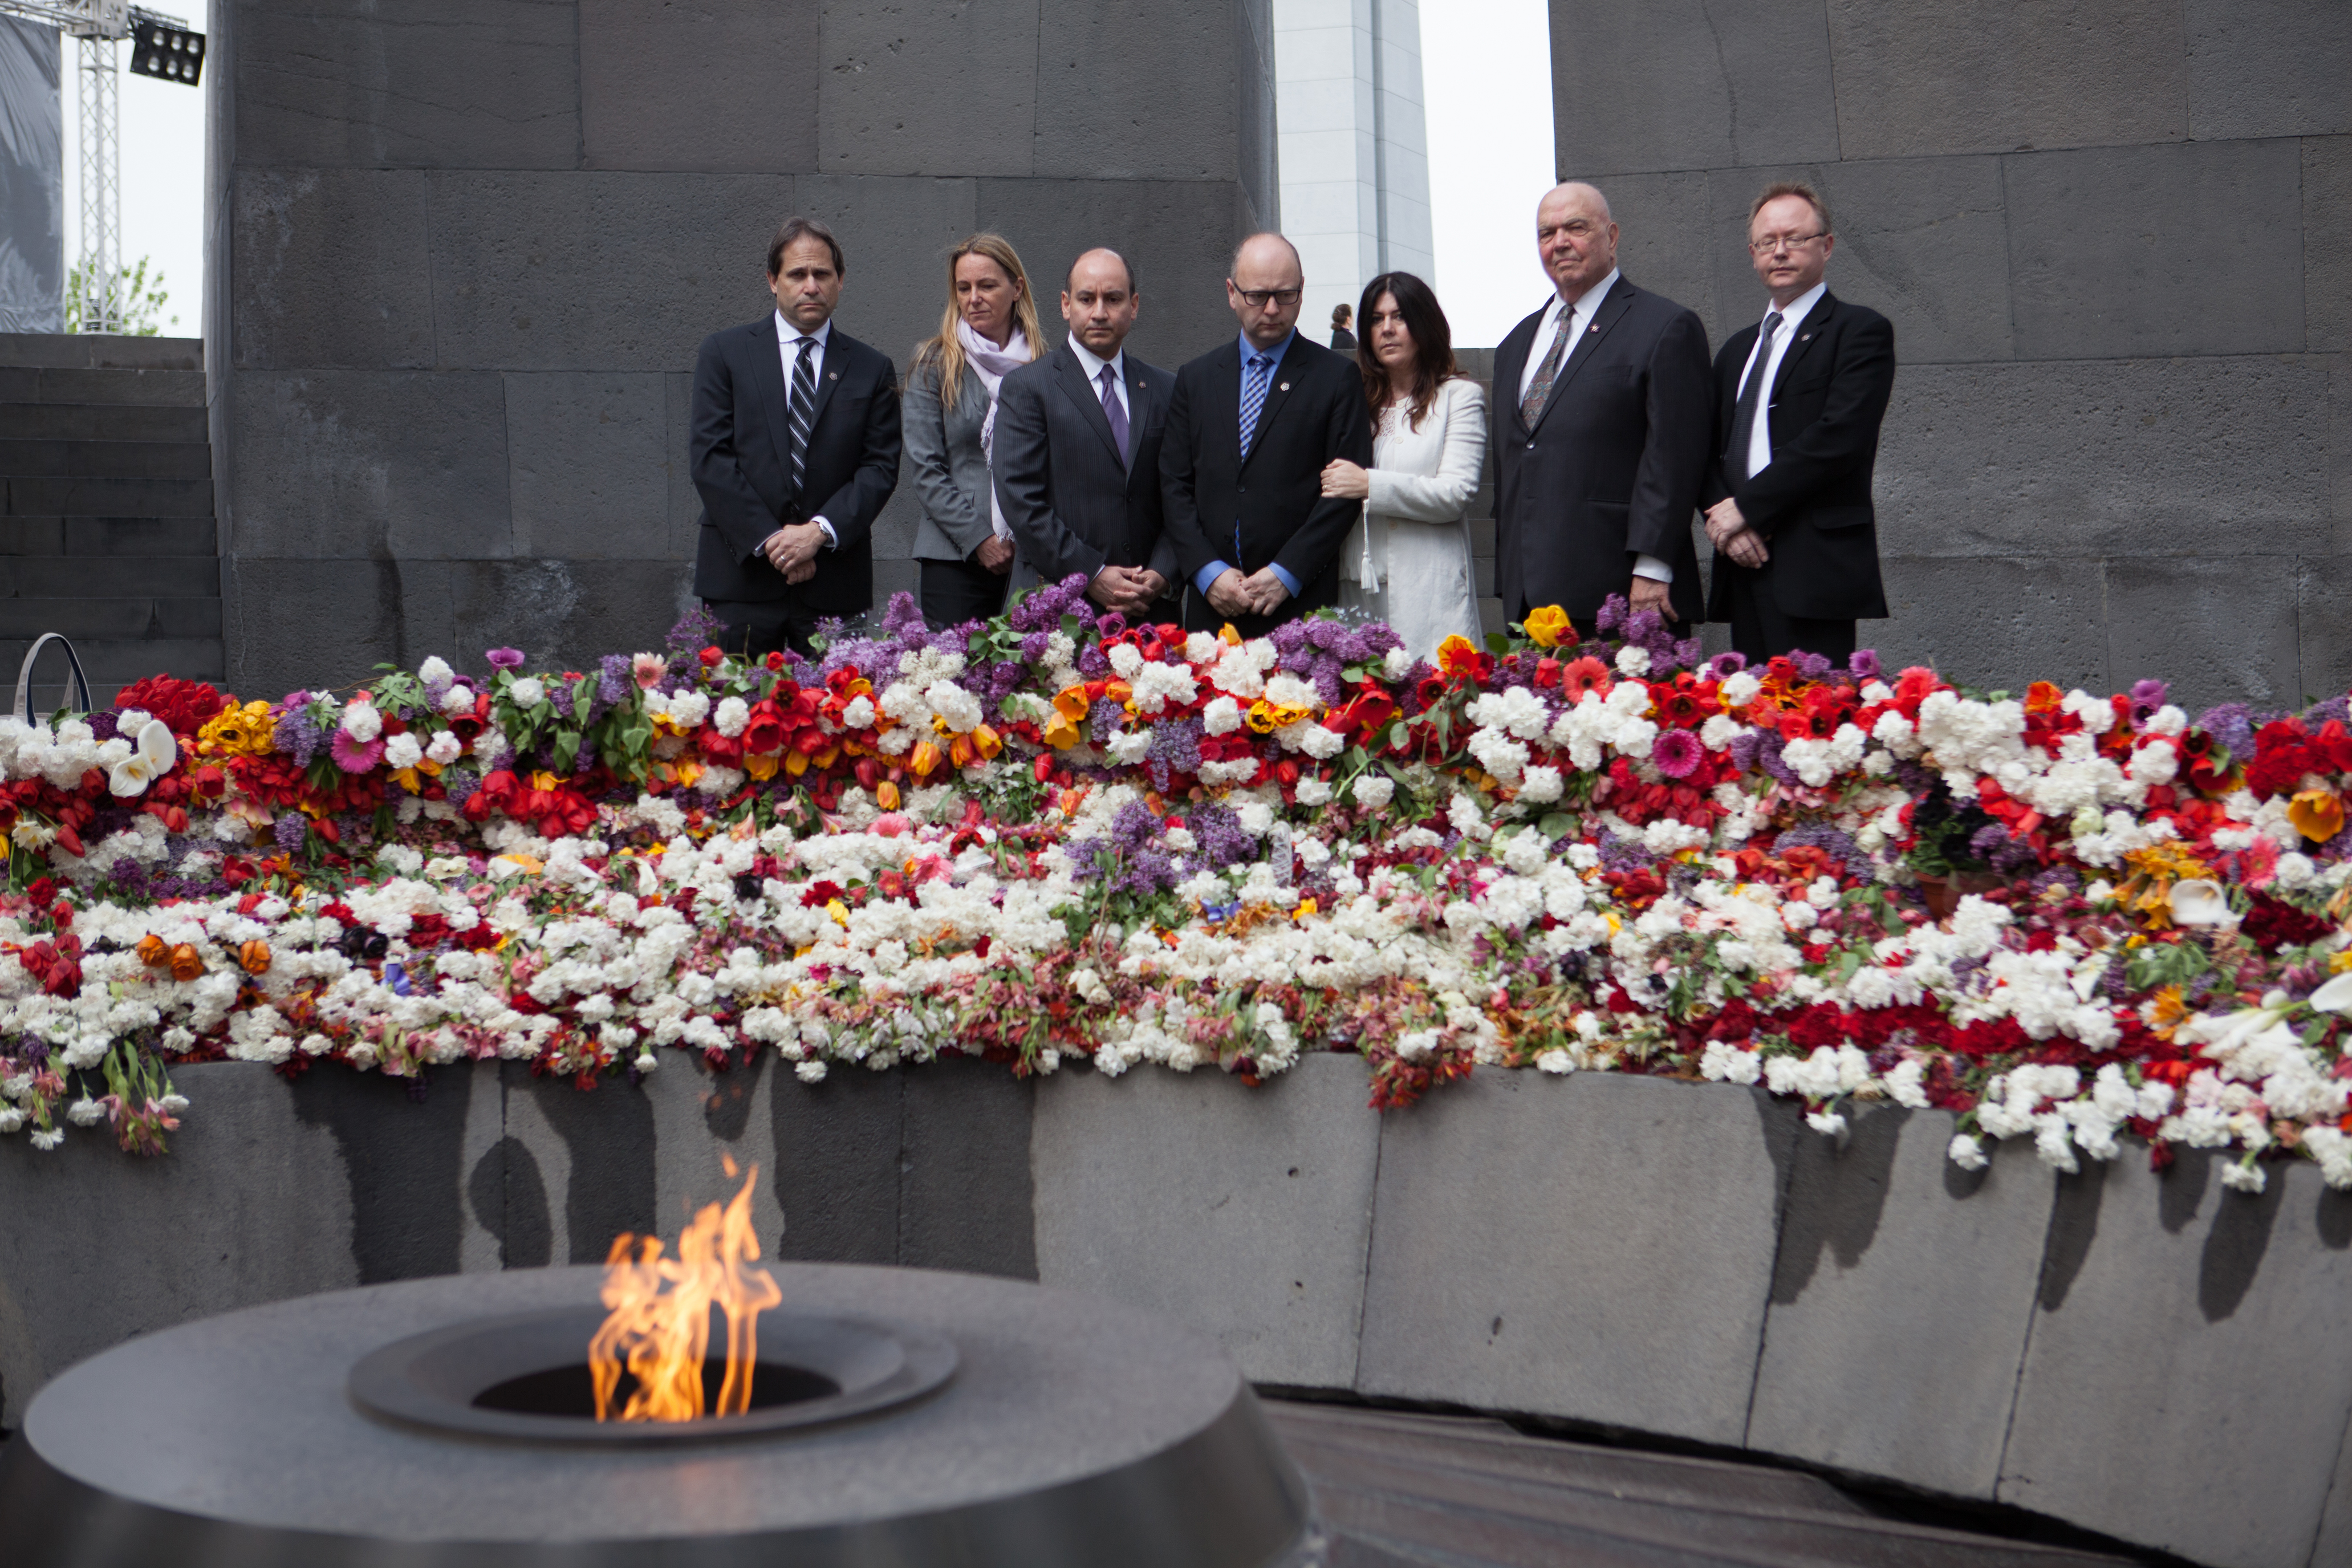 L-R: Ari Zev, Karen Jungblut, Michael Amerian, Stephen Smith, Heather Maio, Richard Hovannisian and Wolf Gruner at the Armenian Genocide Memorial